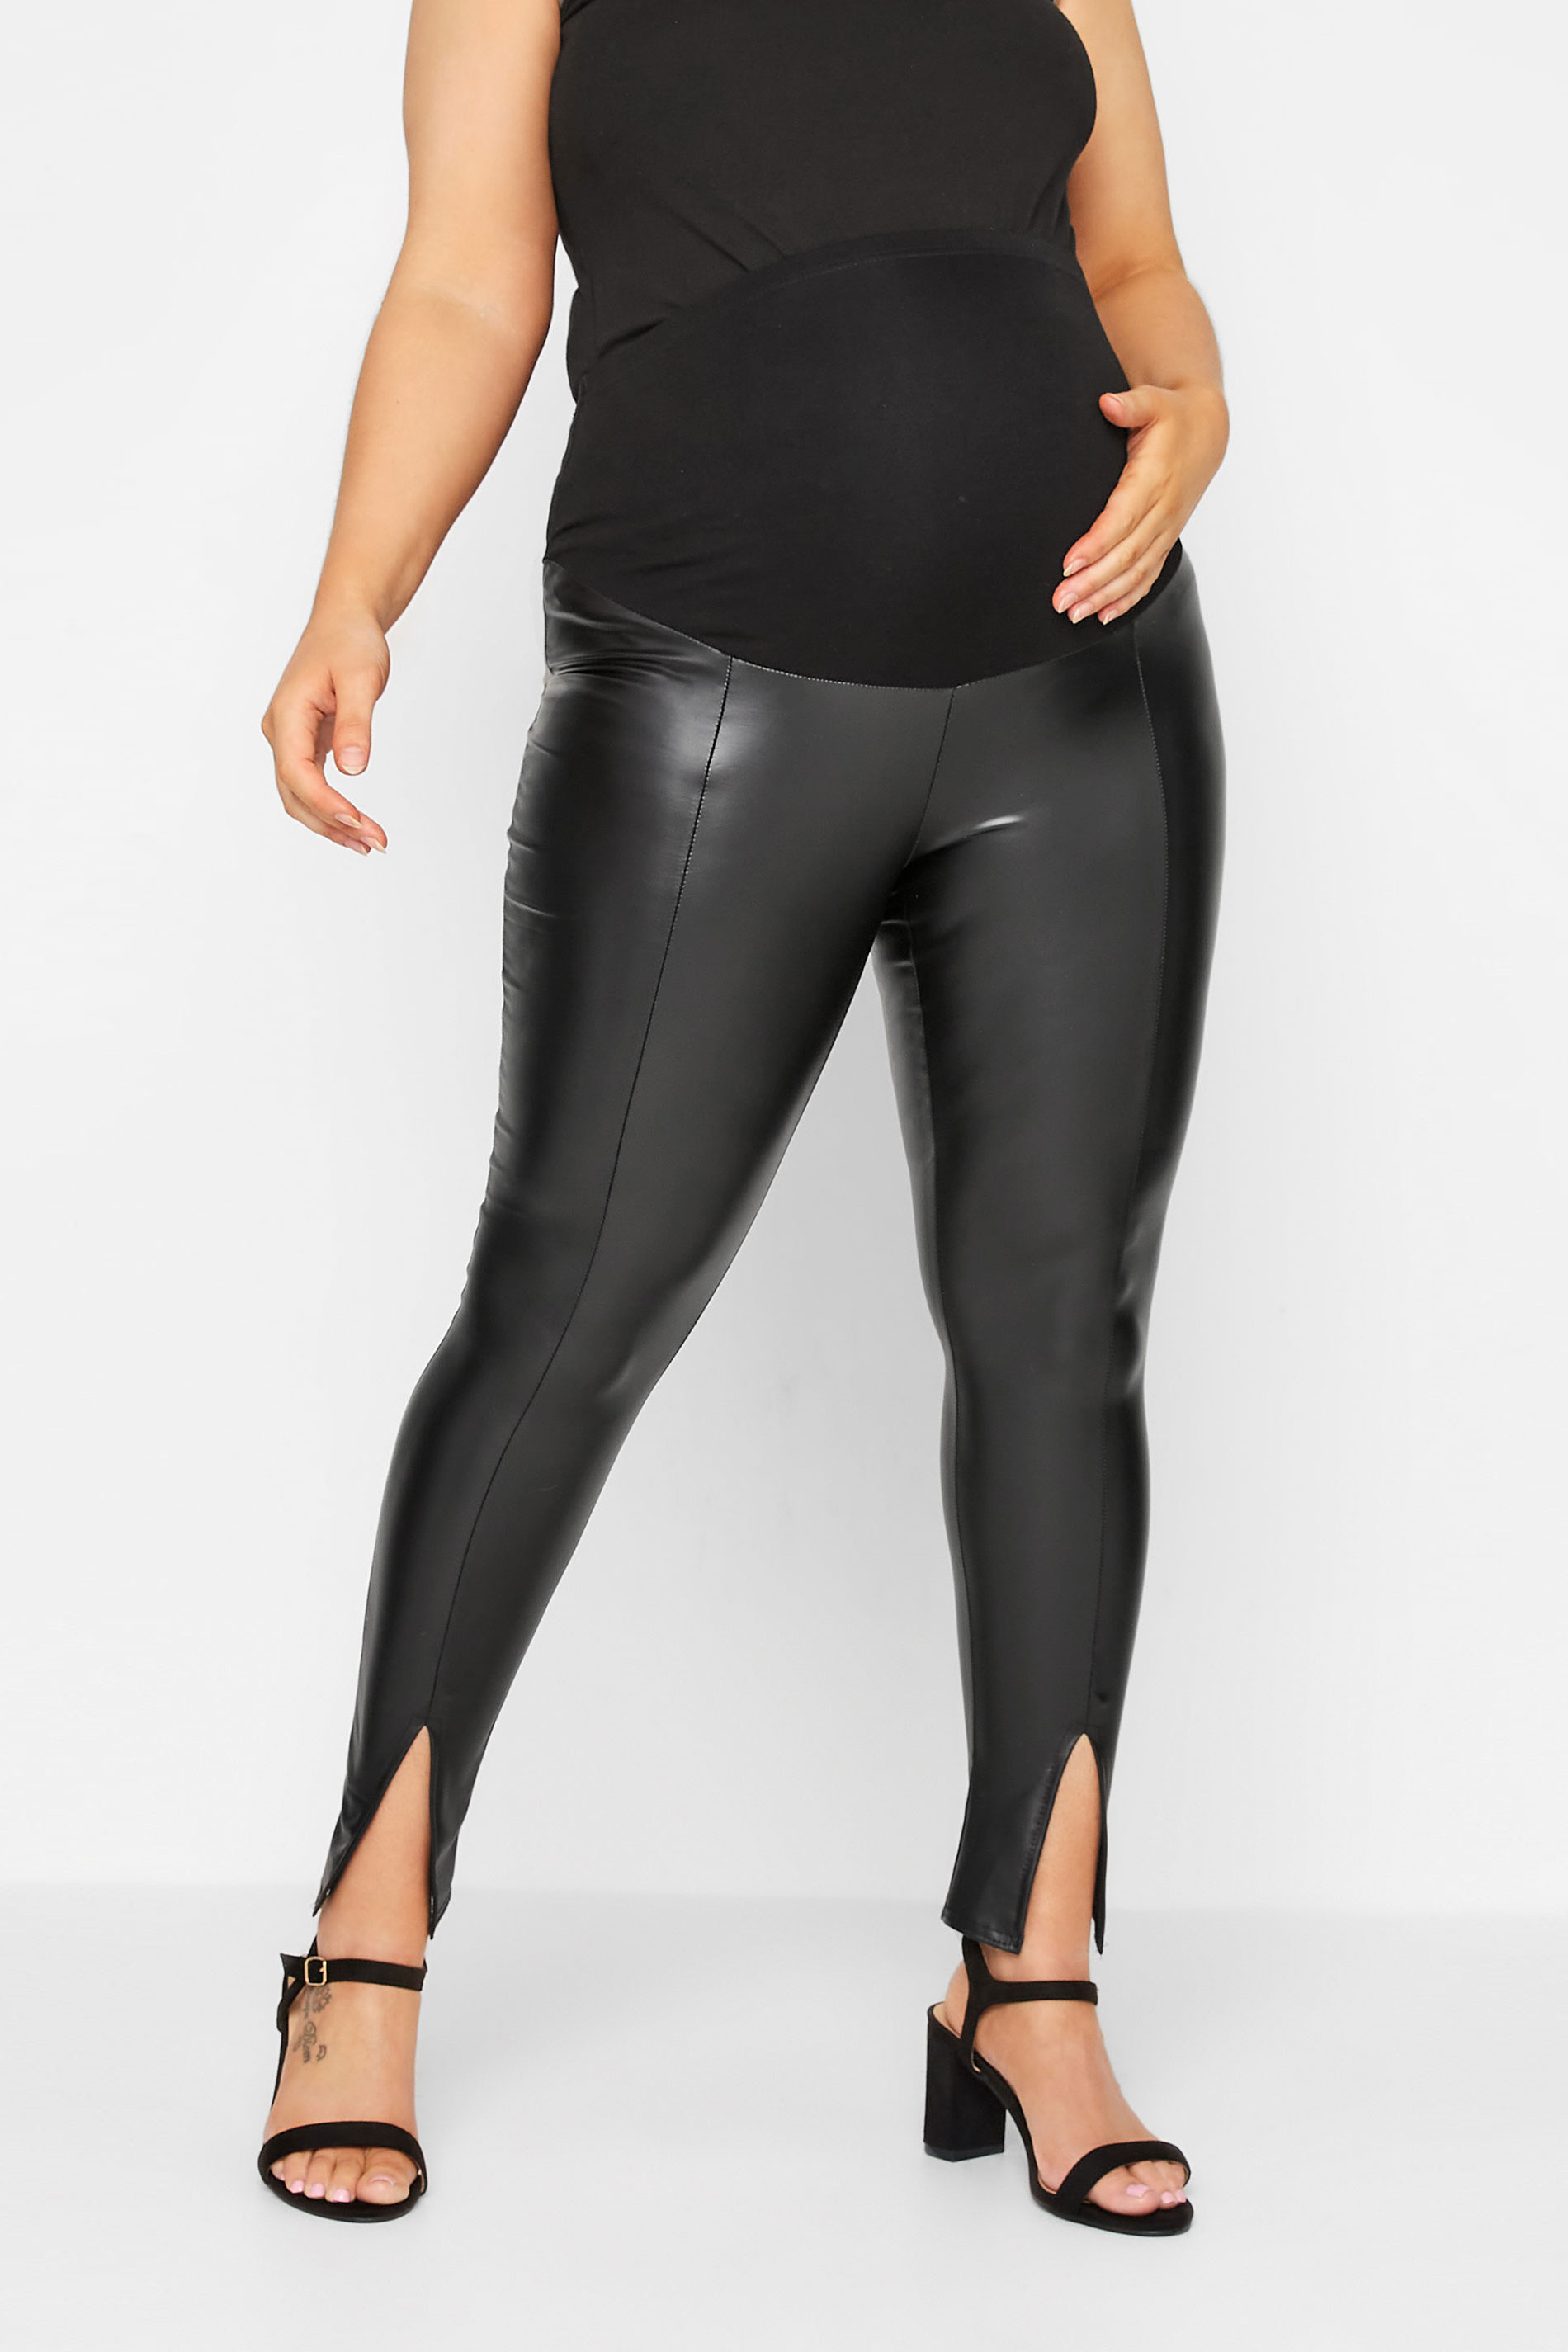 Black Leather-Look Split Front Leggings